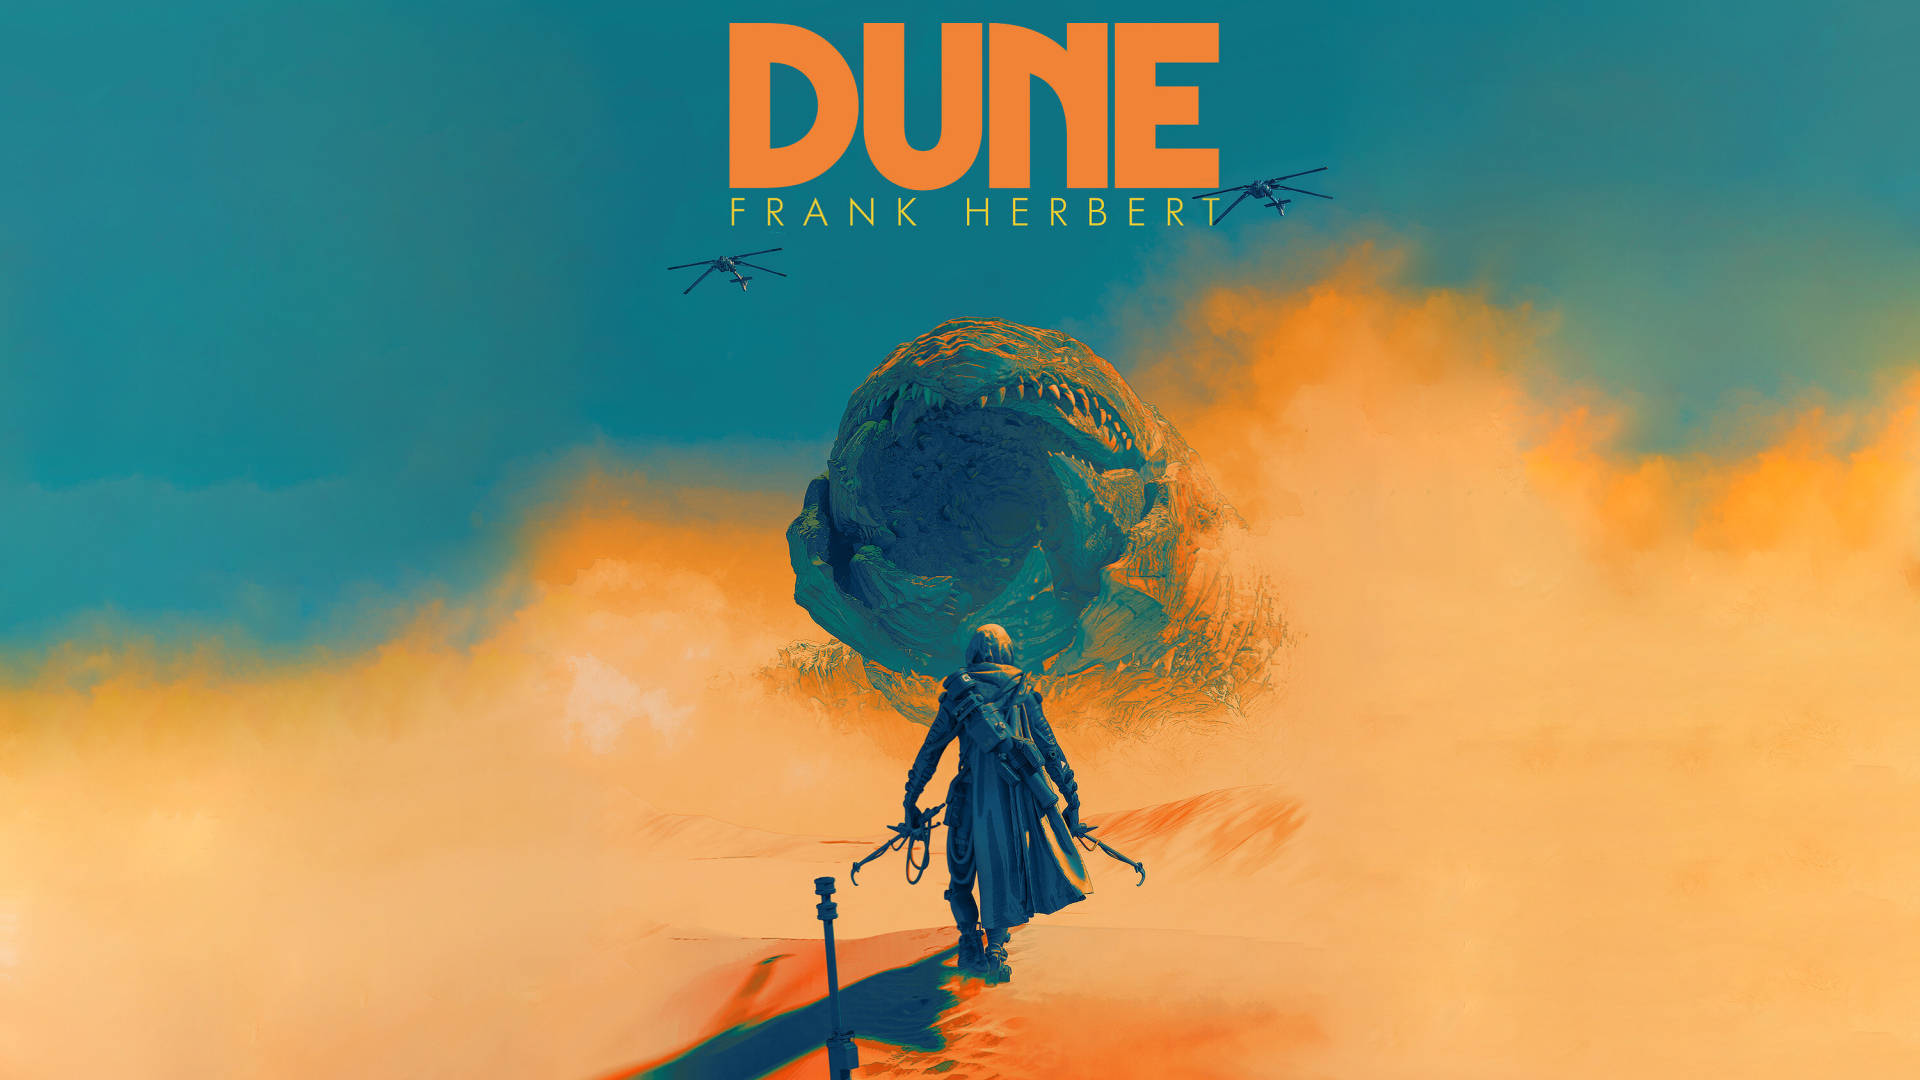 Frank Herbert's Dune 2021 Movie